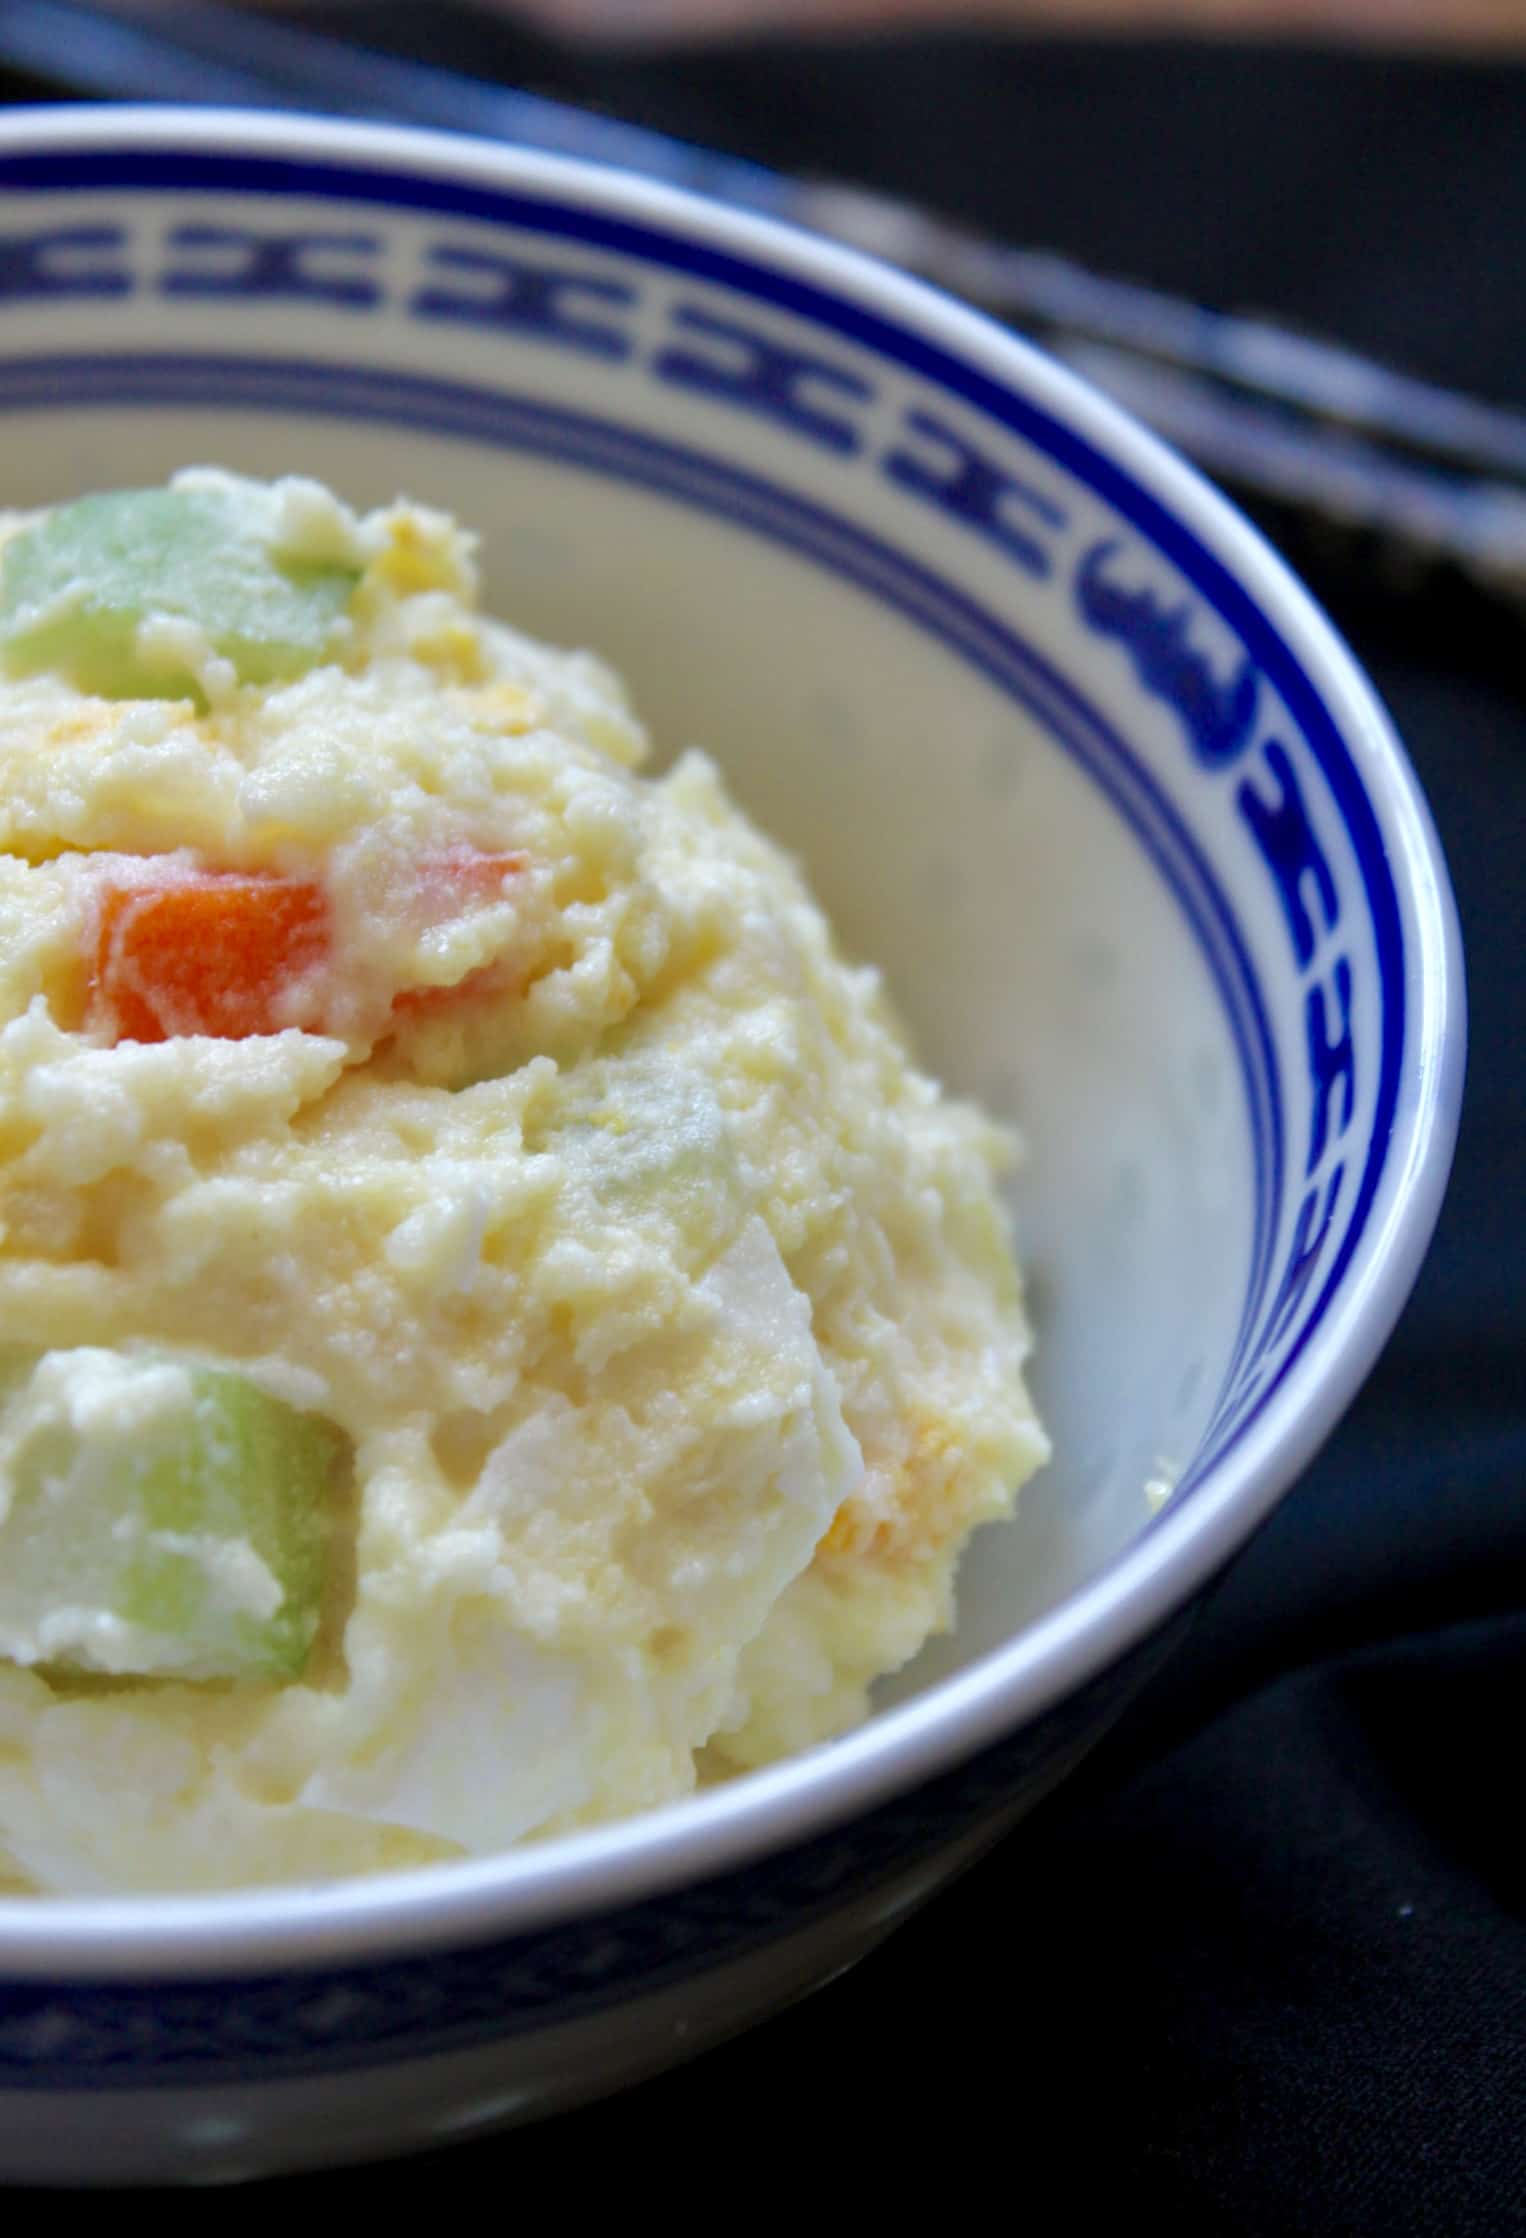 scoop of Korean potato salad